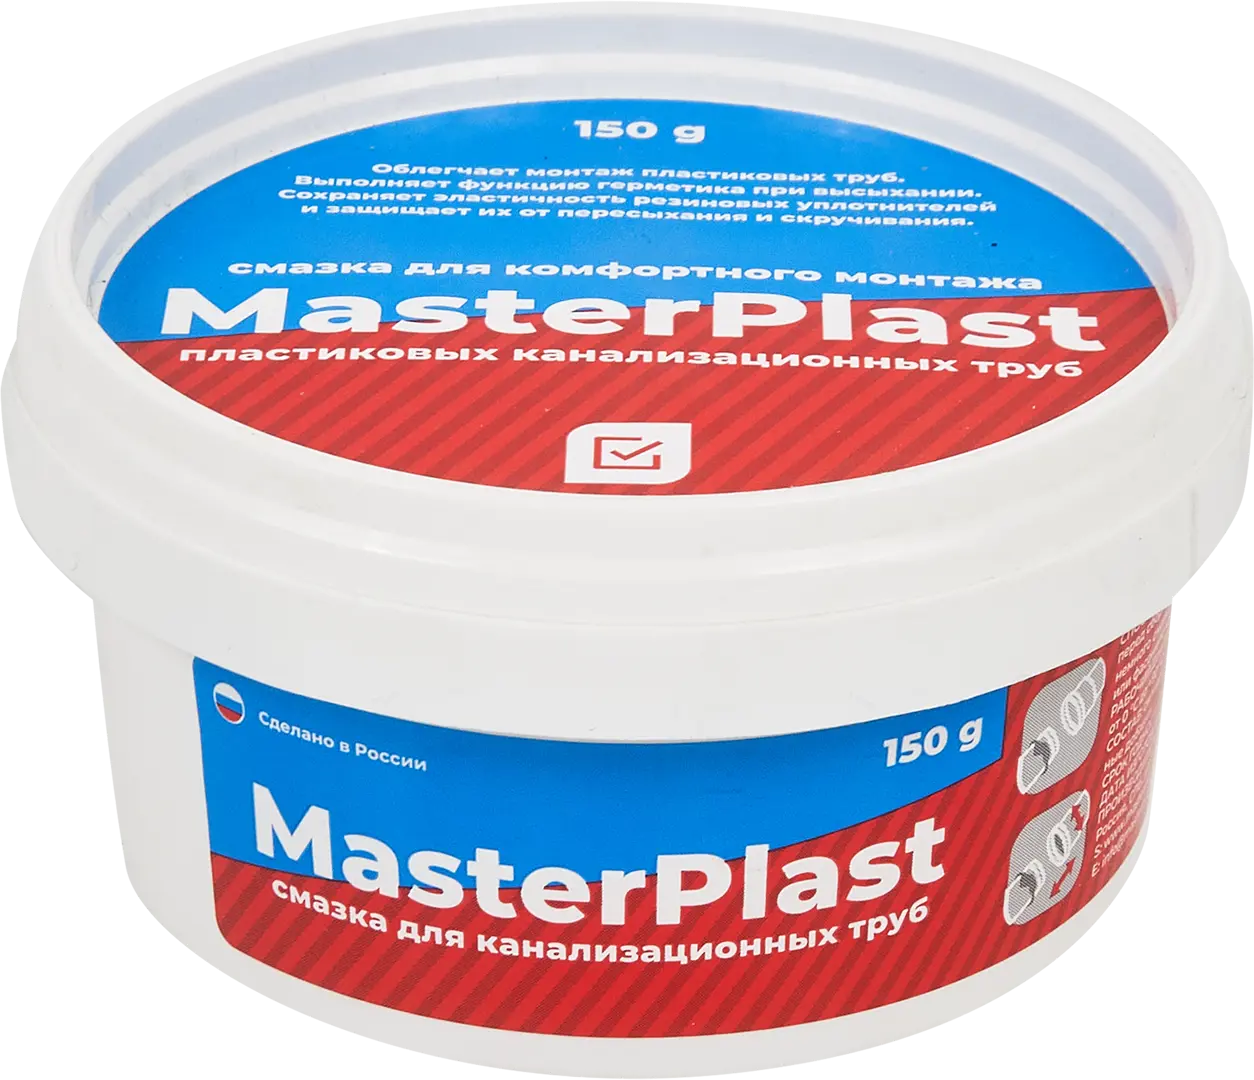 Смазка для канализационных труб Masterplast 150 г смазка силиконовая forplast для монтажа пластиковых труб 200 г